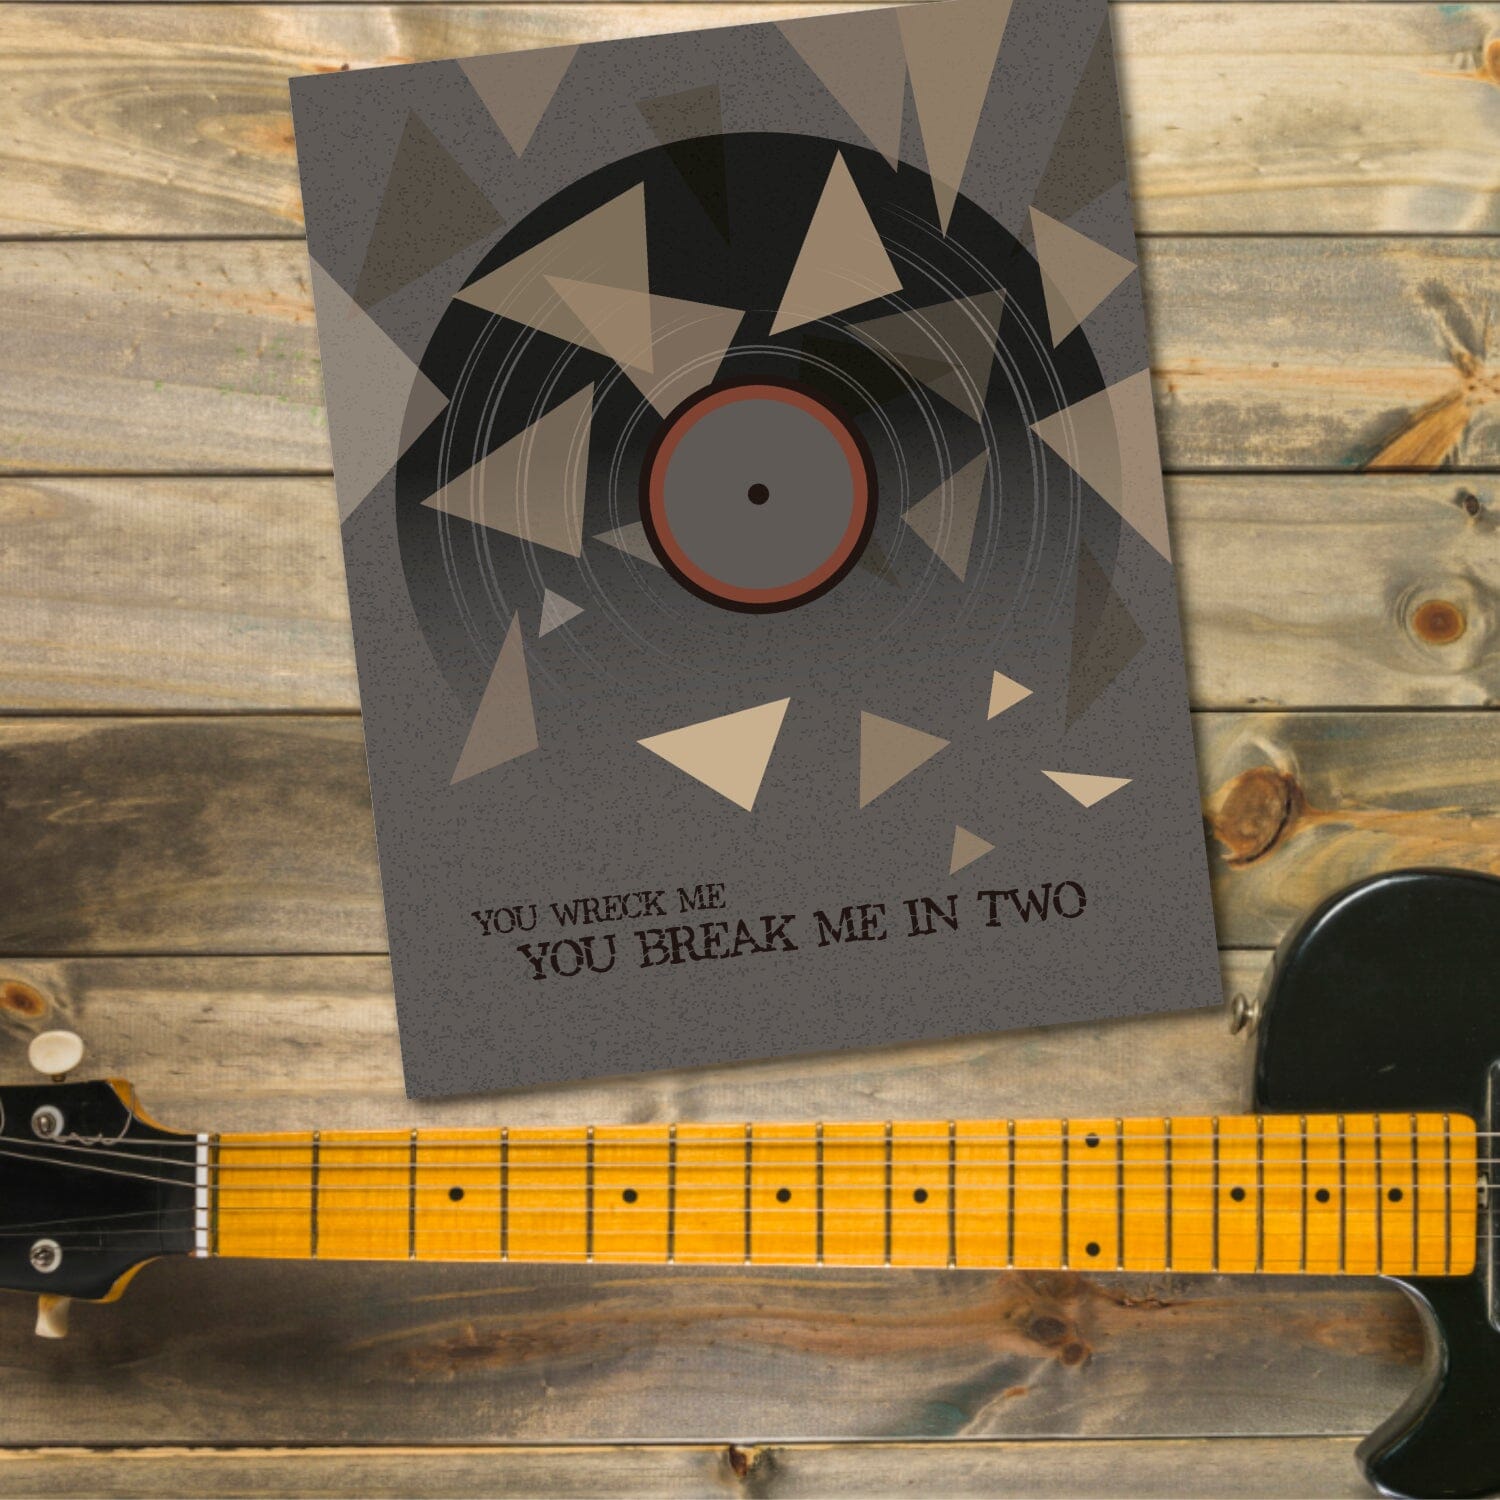 You Wreck me by Tom Petty - Song Lyrics Art Poster Print Song Lyrics Art Song Lyrics Art 8x10 Unframed Print 